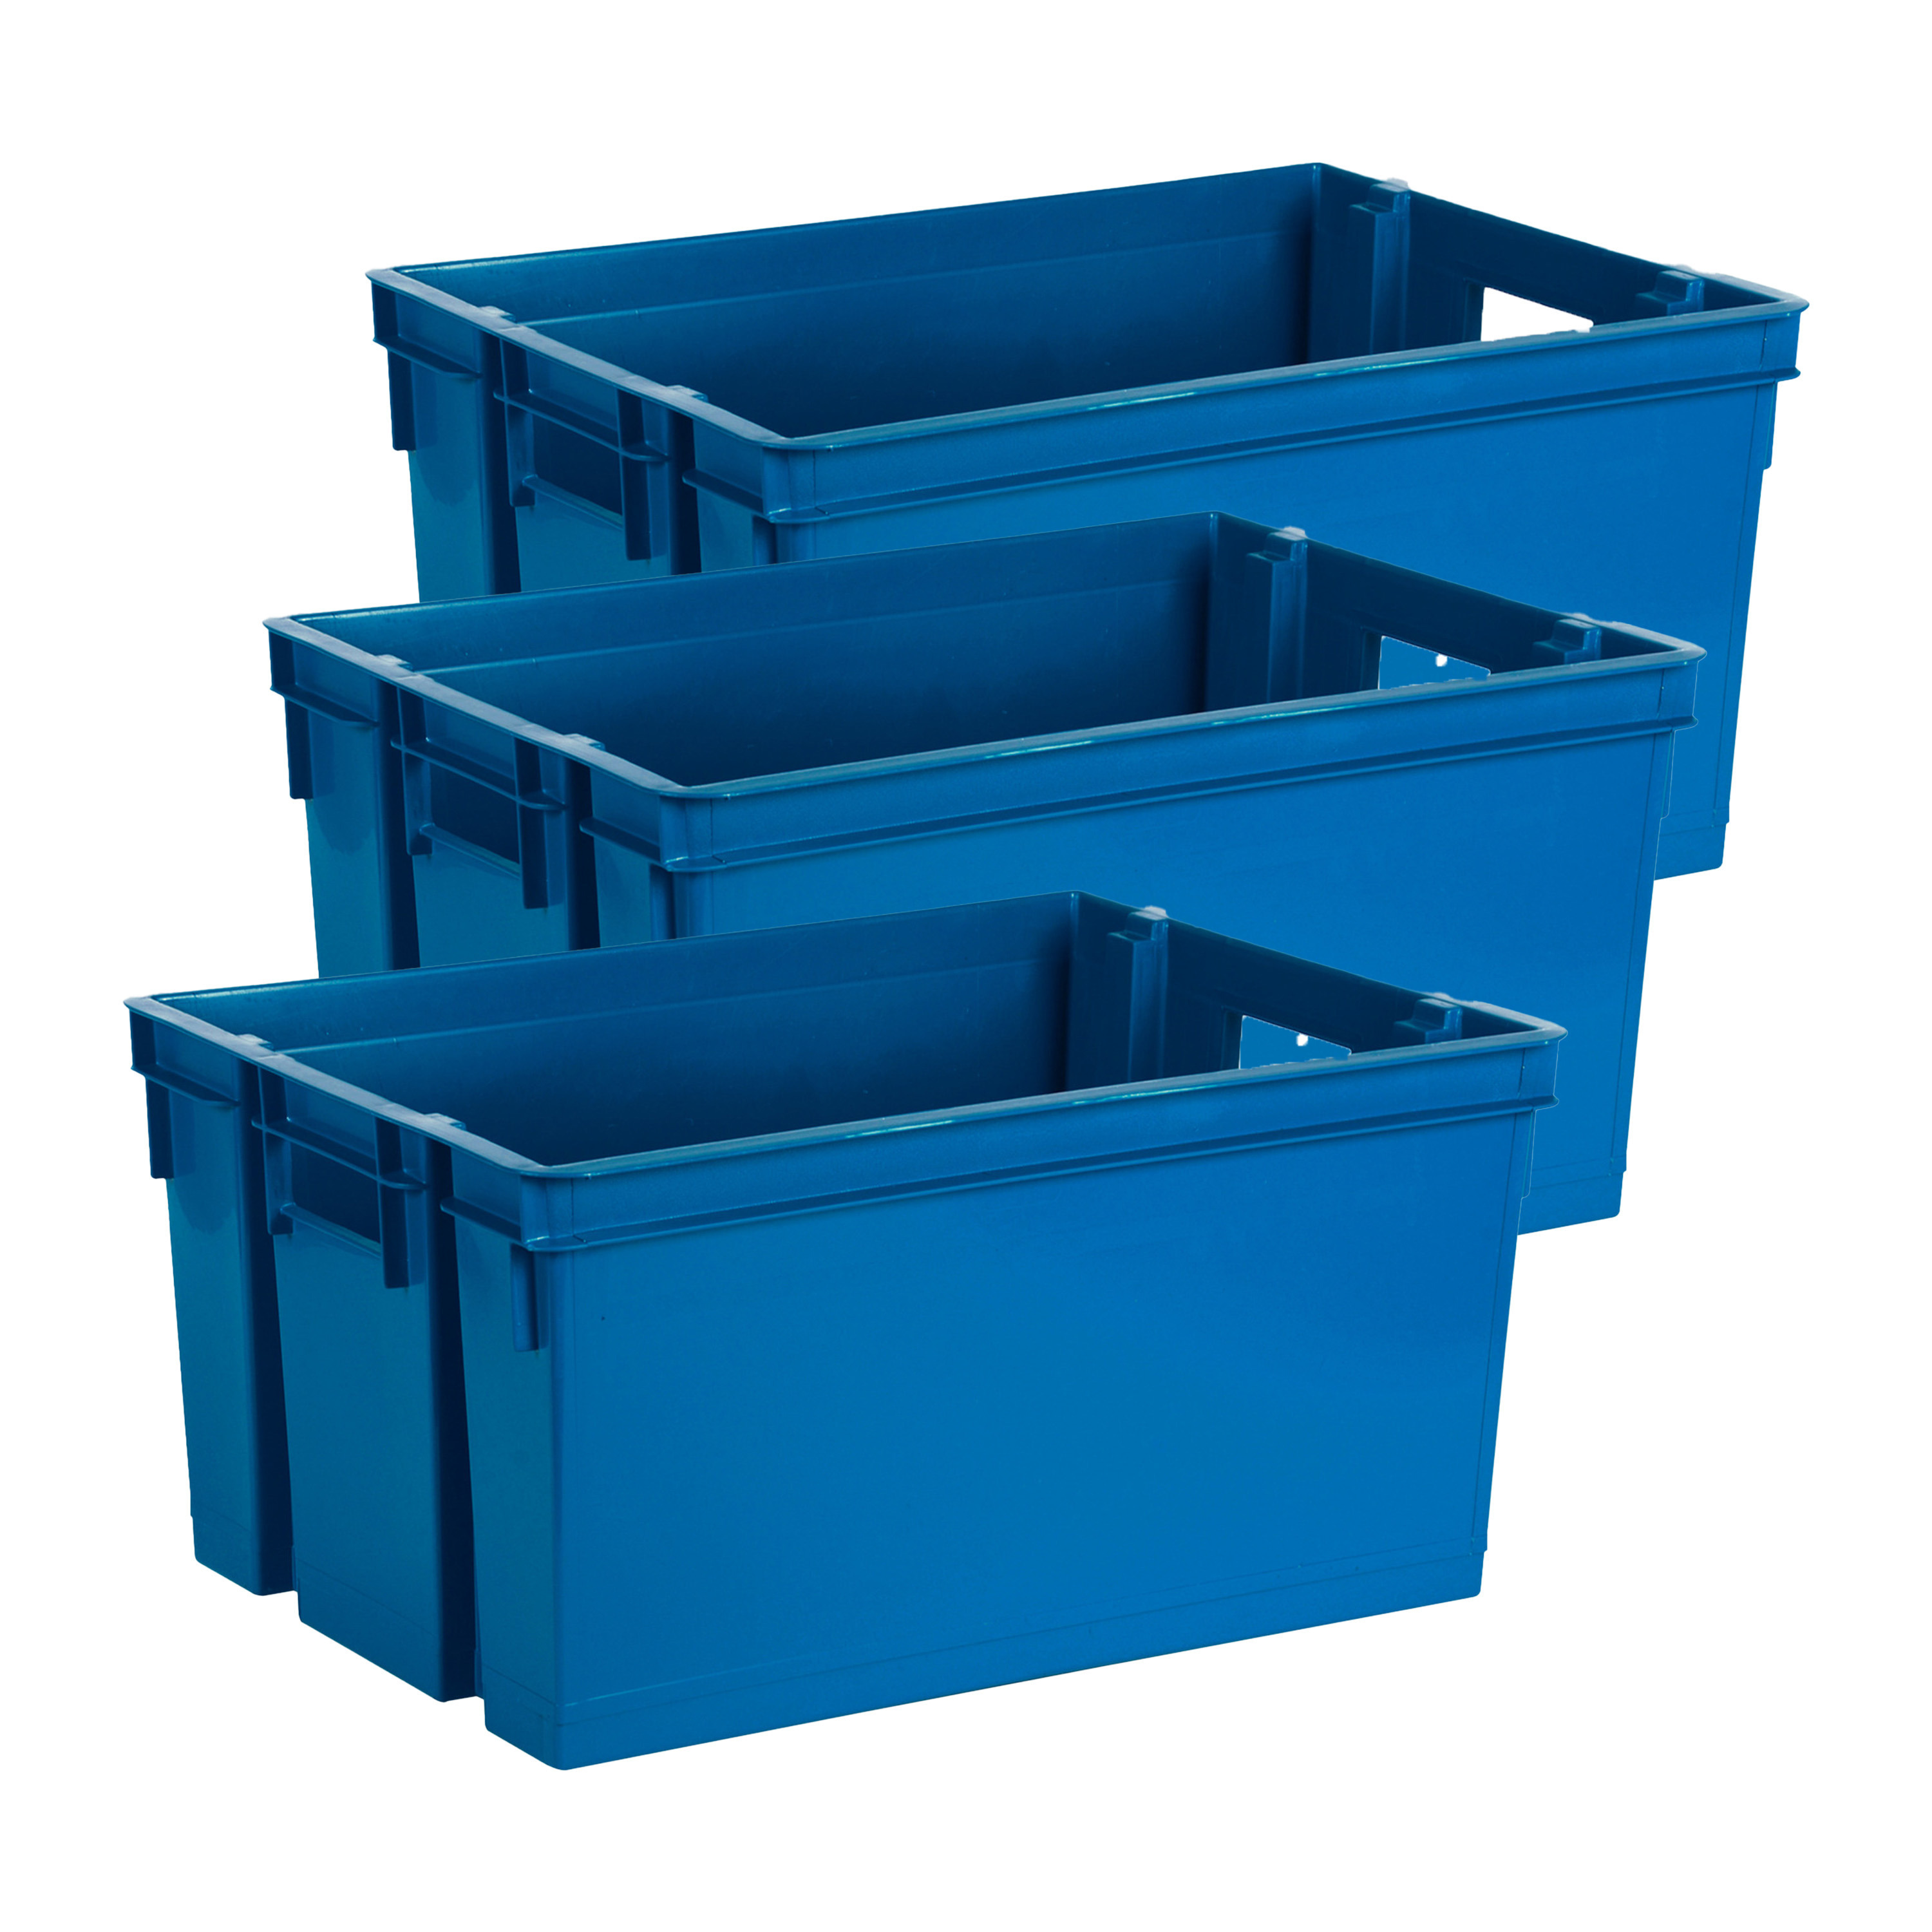 Opbergbox-opbergkrat 50 L 3x blauw kunststof 56 x 41 x 29 cm stapelbaar-nestbaar